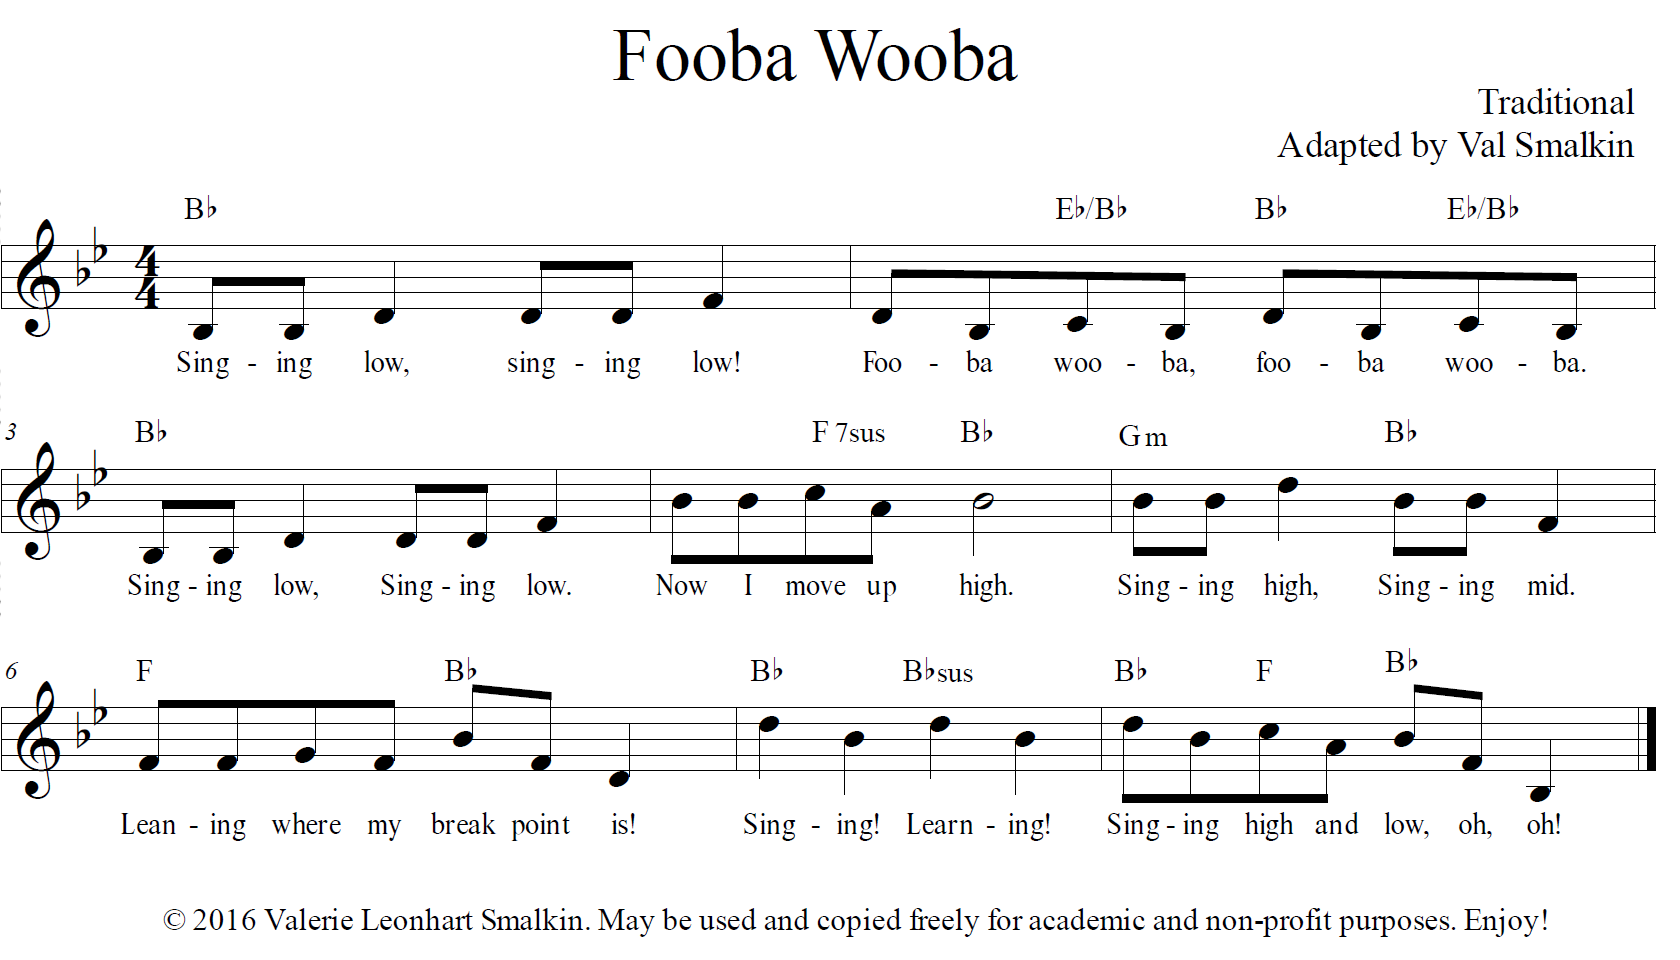 Staff: Fooba Wooba